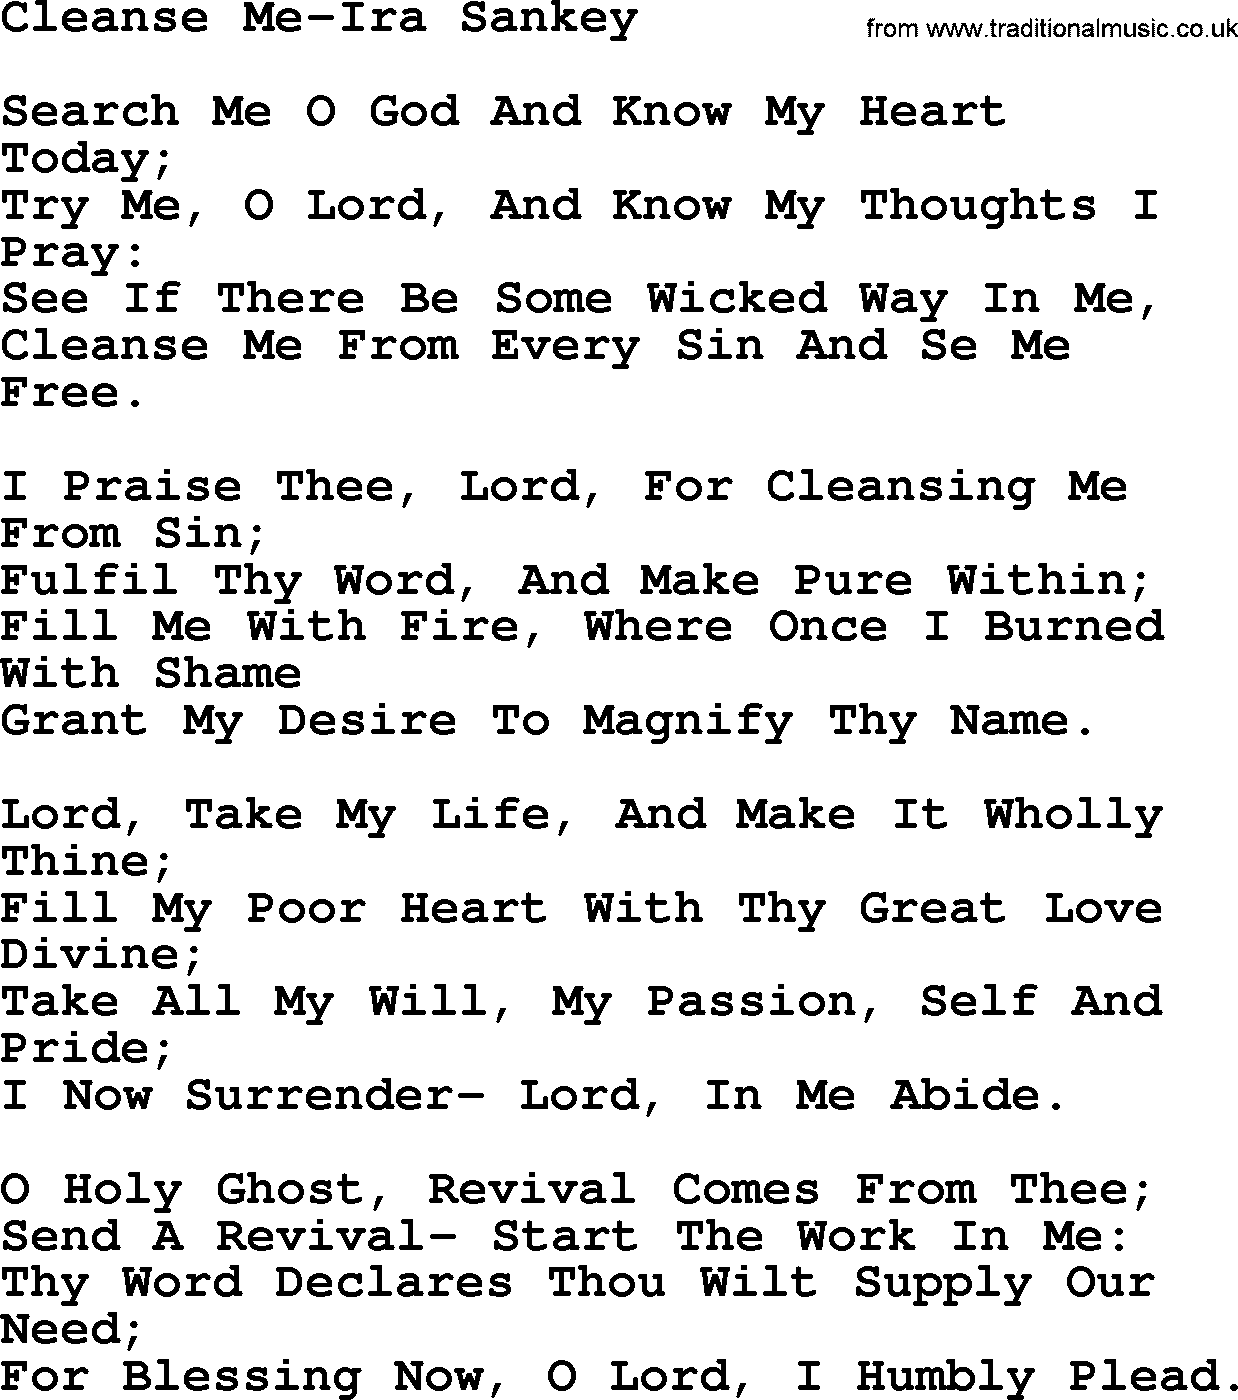 Ira Sankey hymn: Cleanse Me-Ira Sankey, lyrics